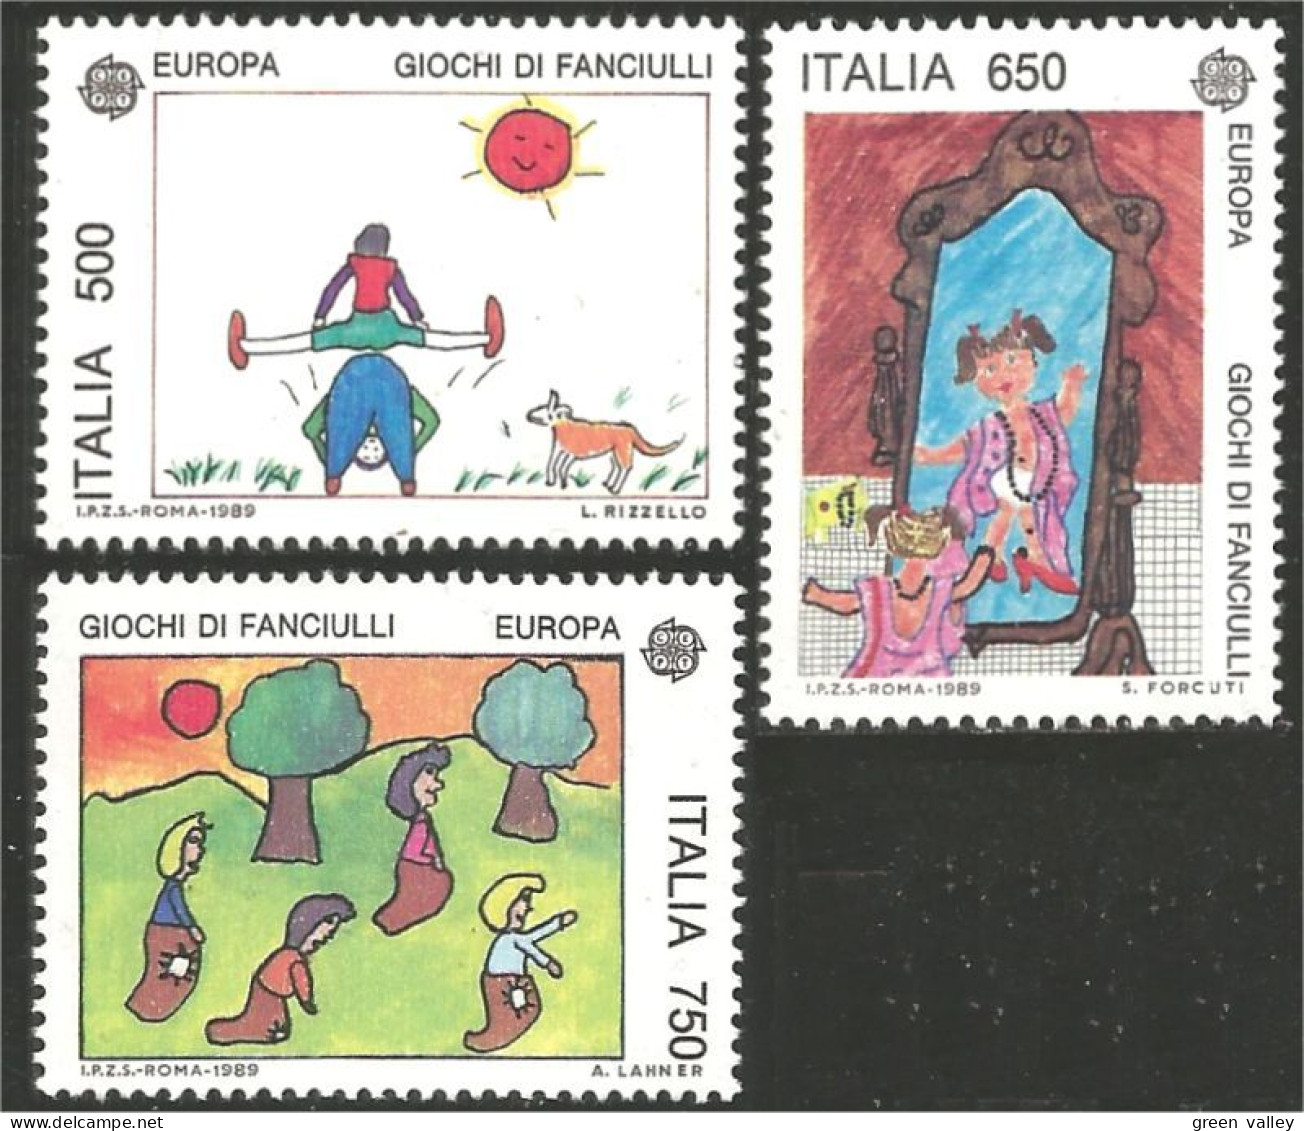 EU89-6 EUROPA-CEPT 1989 Italy Jeux Enfants Children Games Kinderspiele Dog Chien MNH ** Neuf SC - 1989